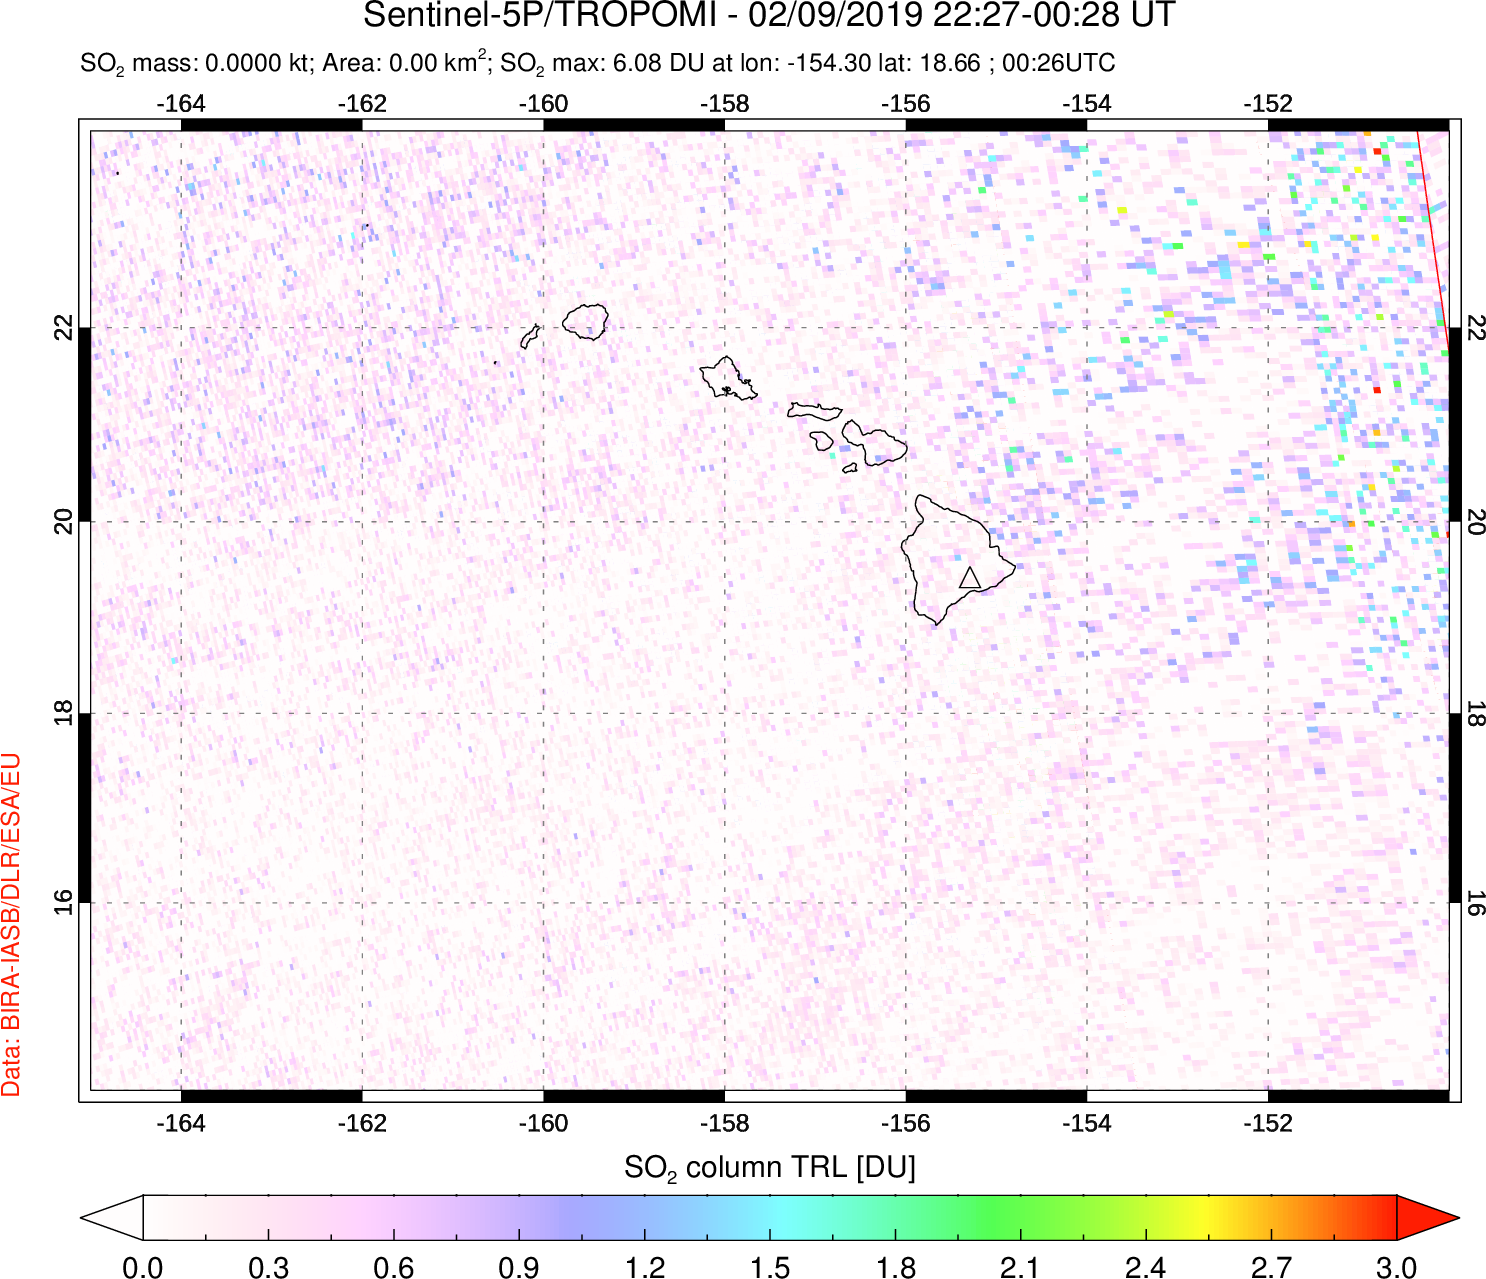 A sulfur dioxide image over Hawaii, USA on Feb 09, 2019.